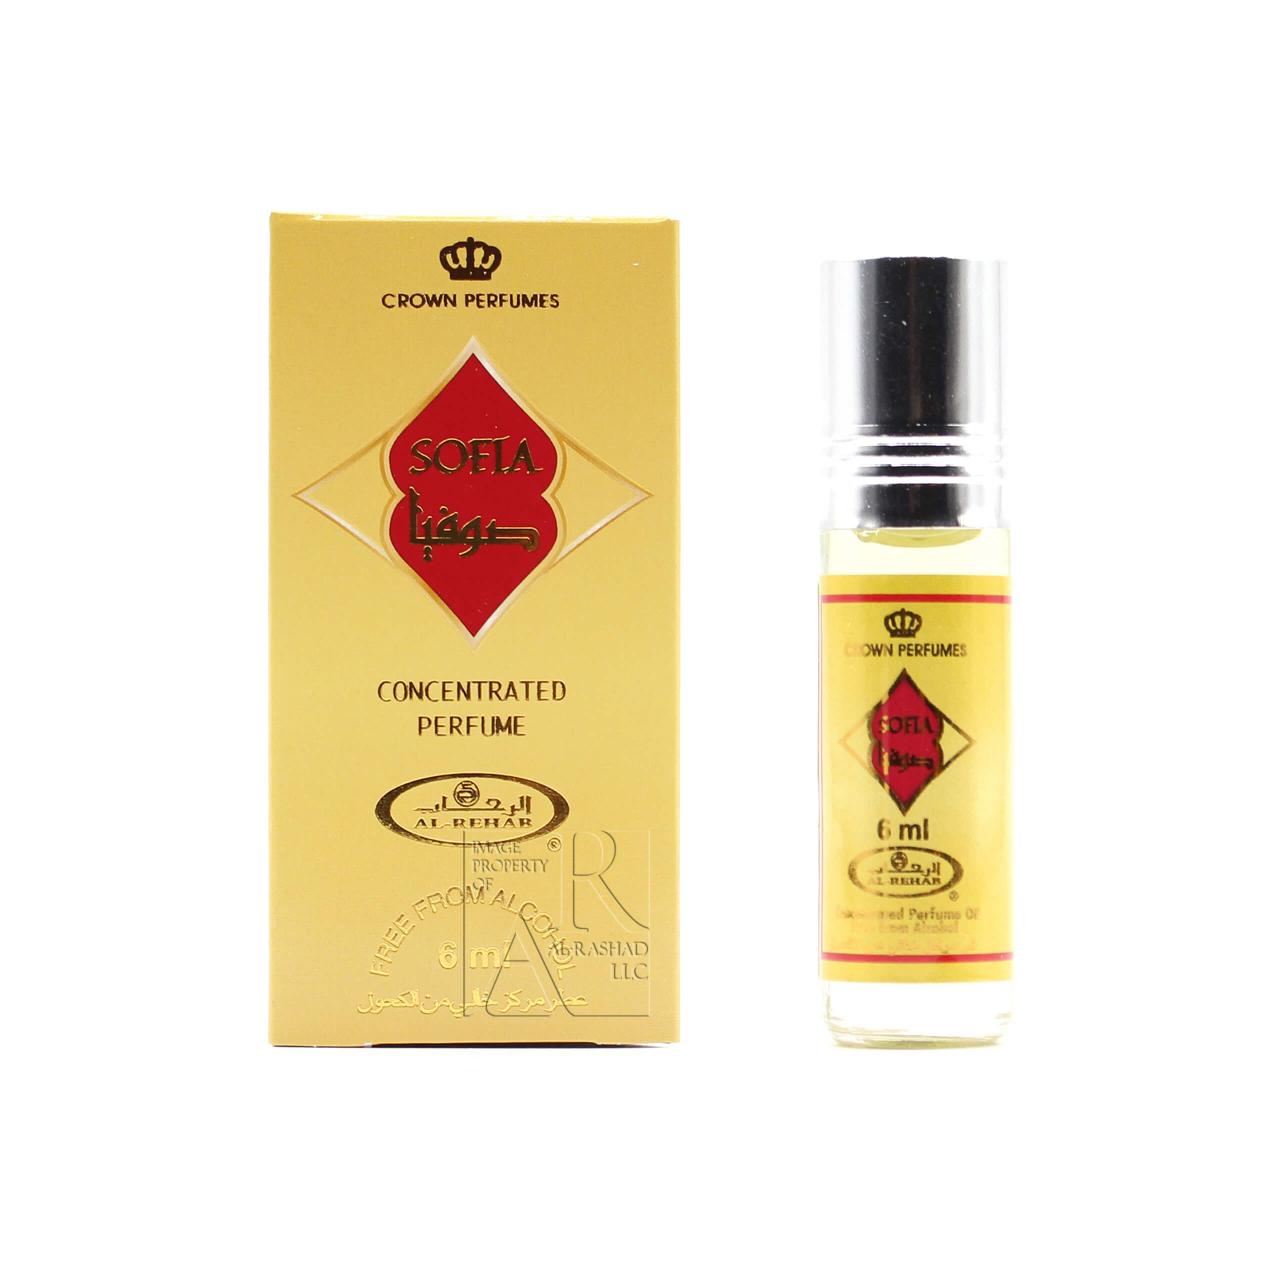 6ml Perfume Oils